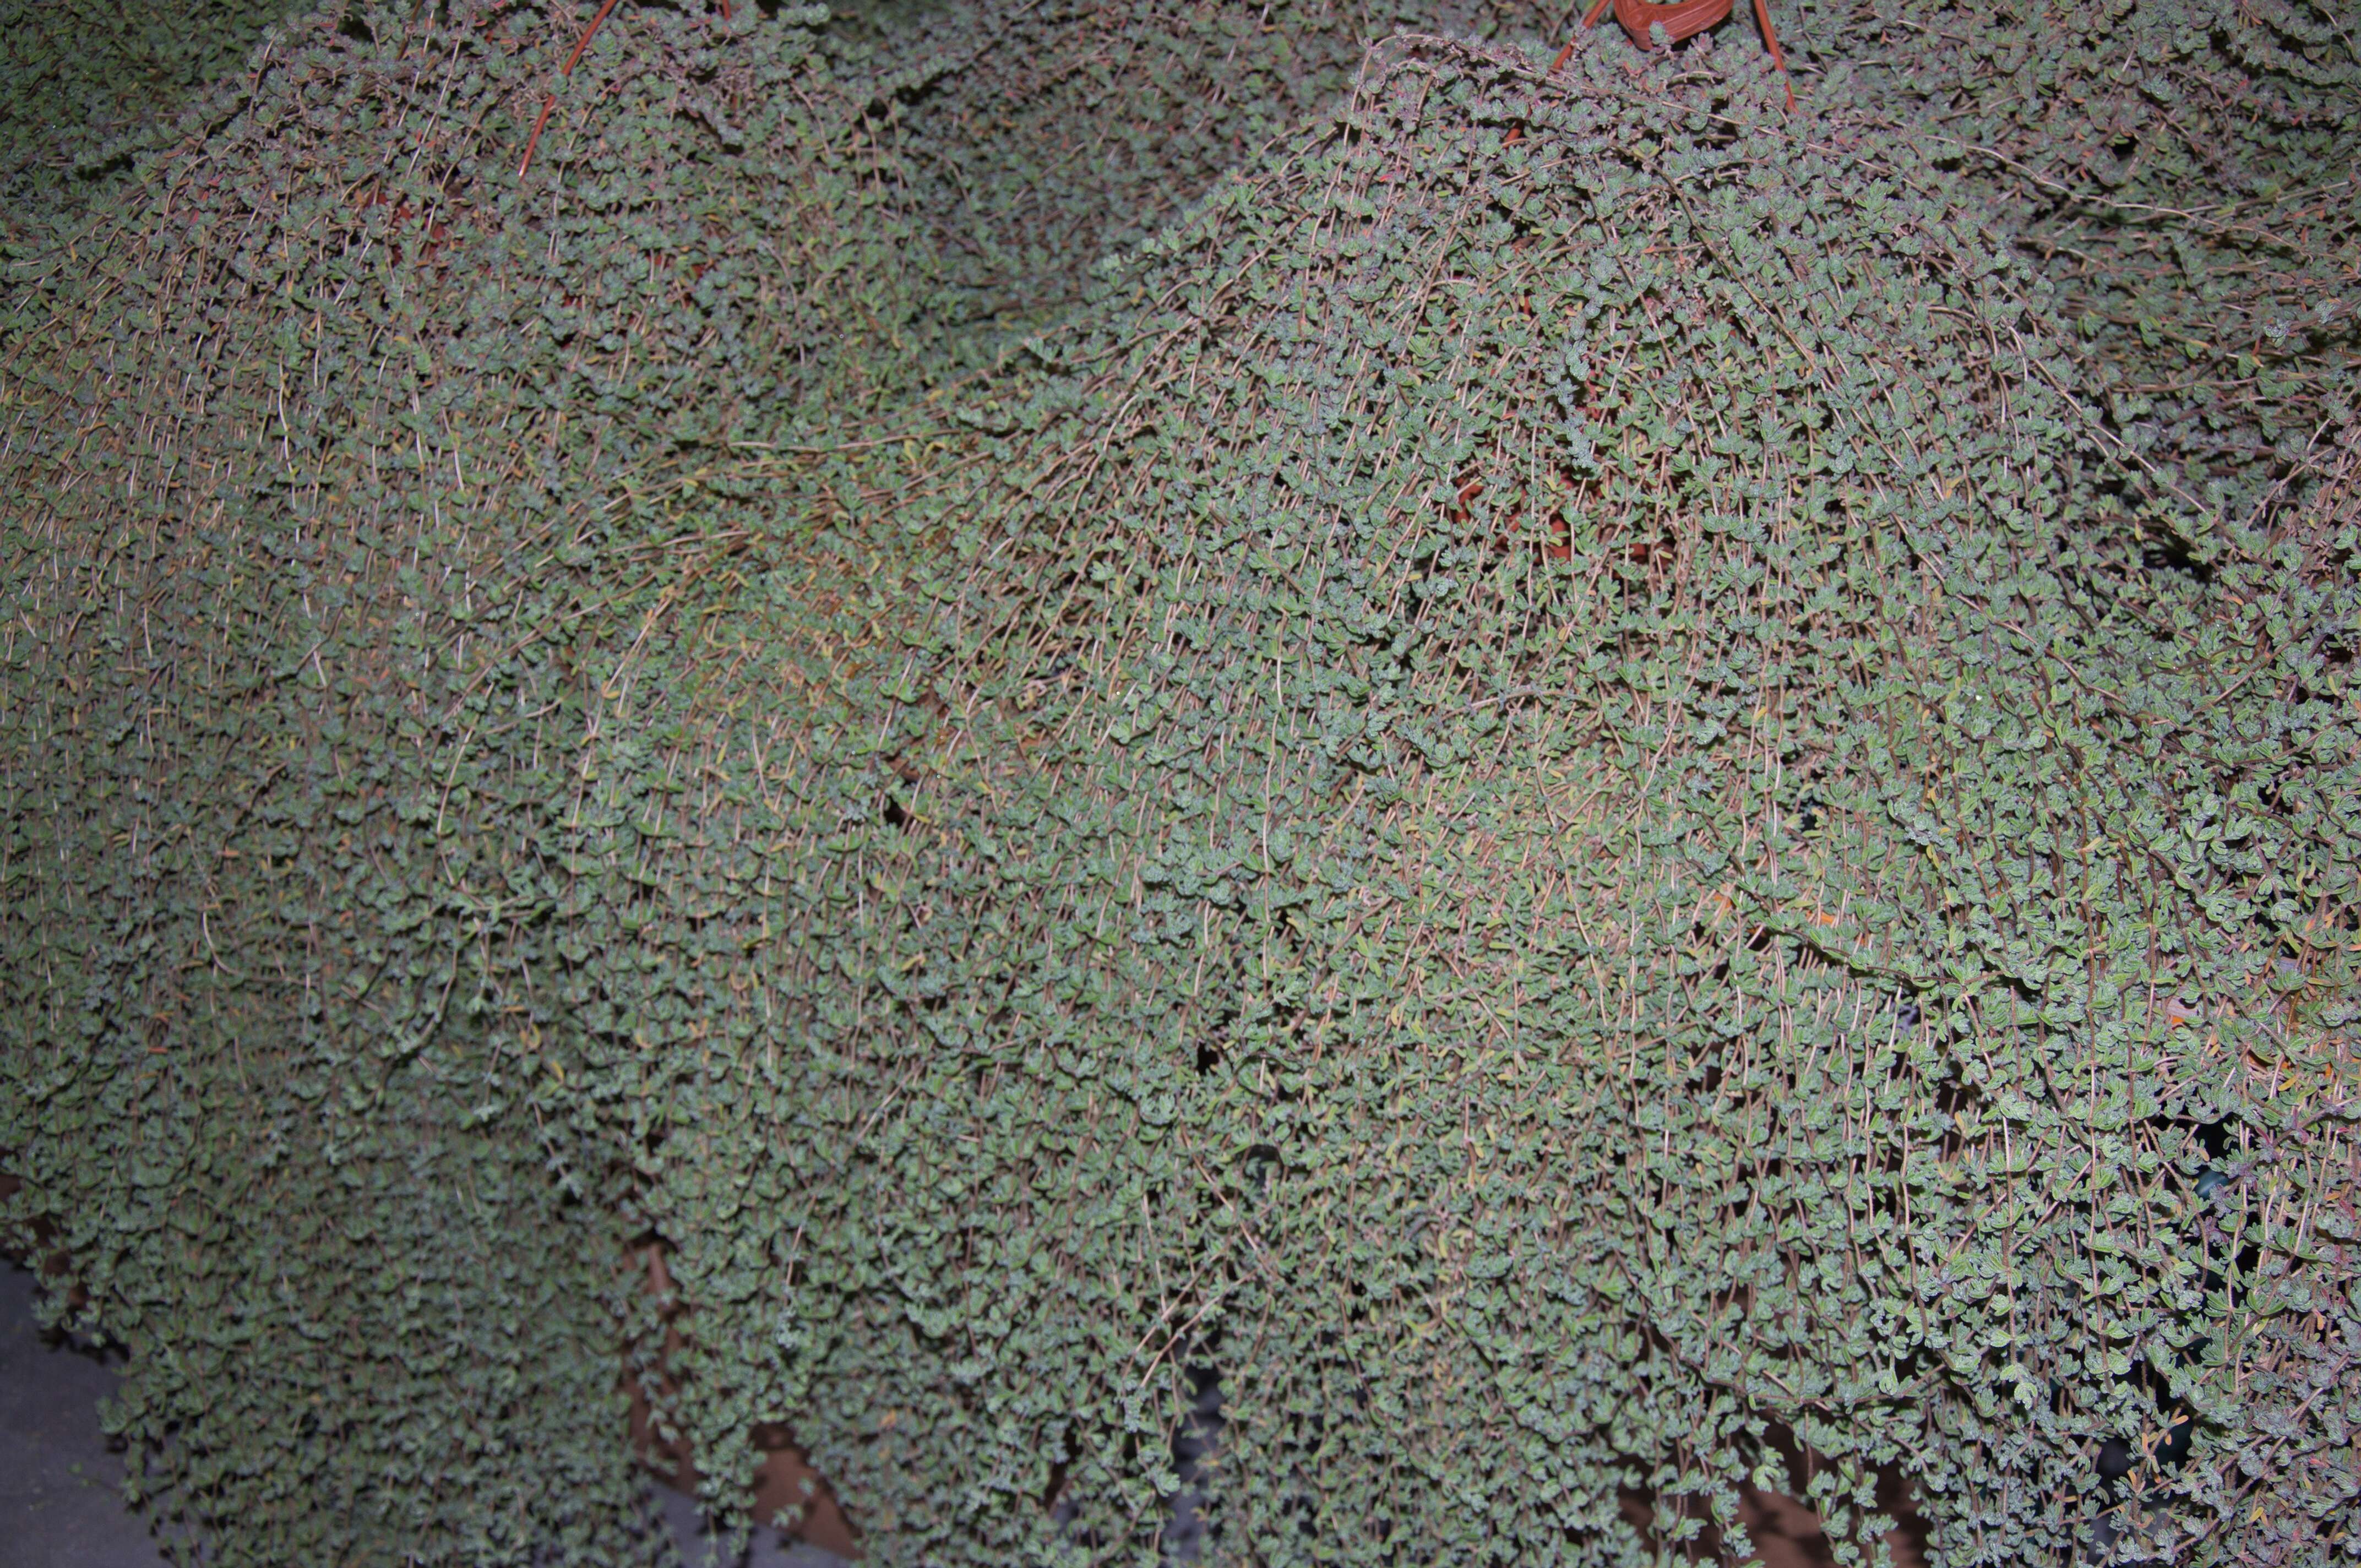 Image of Aizoaceae